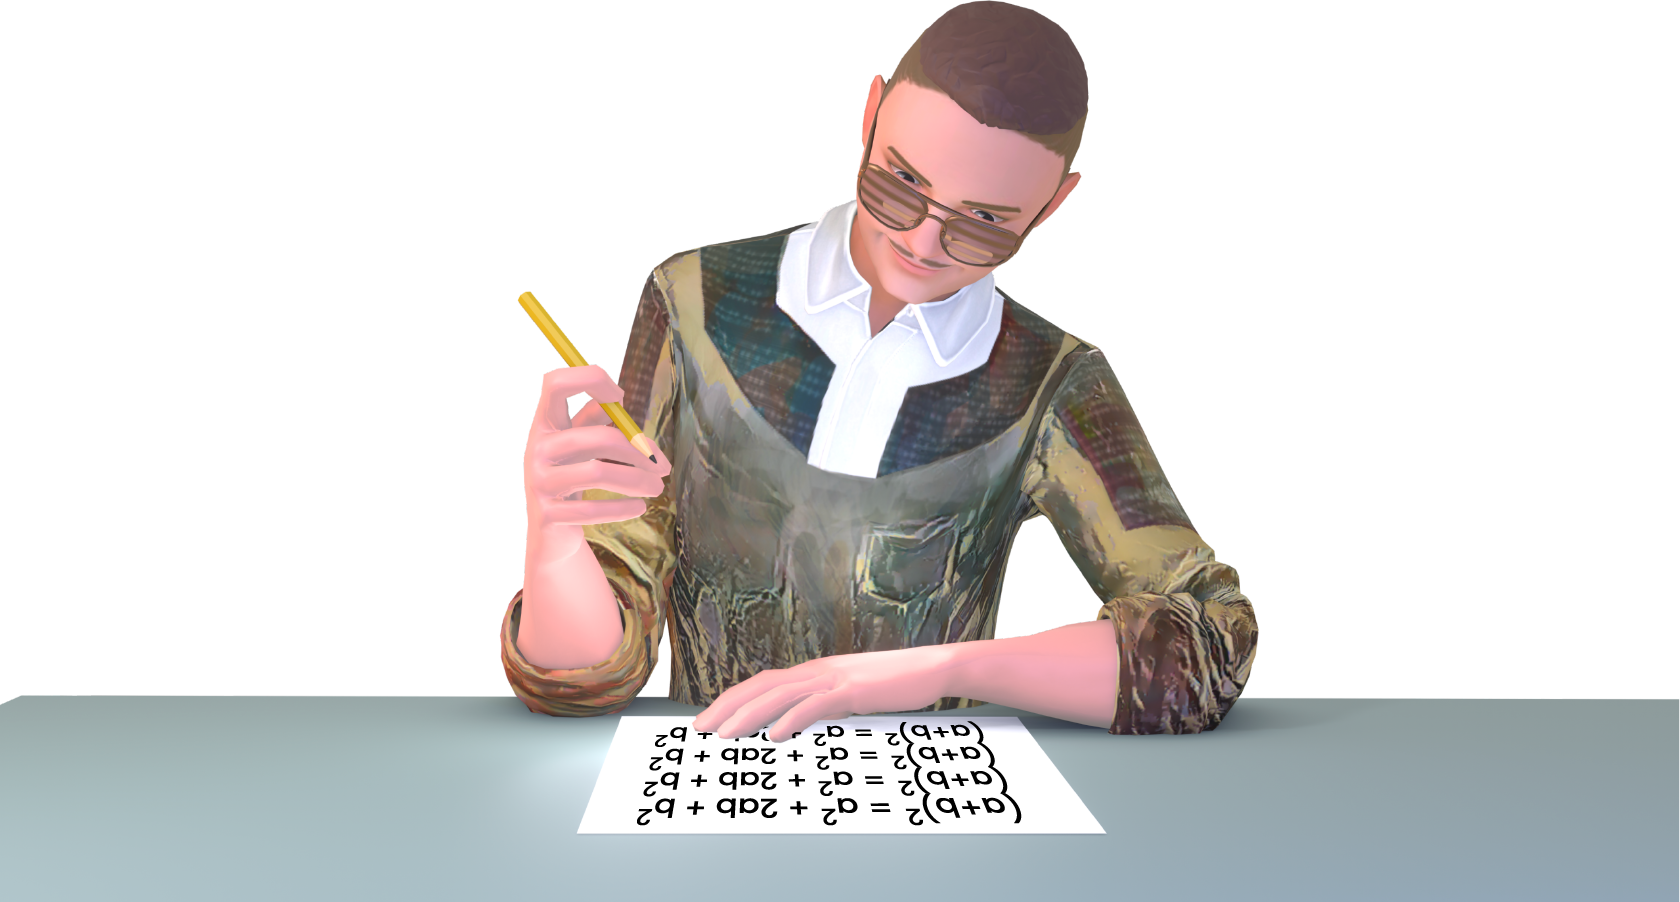 Cool dude writing math